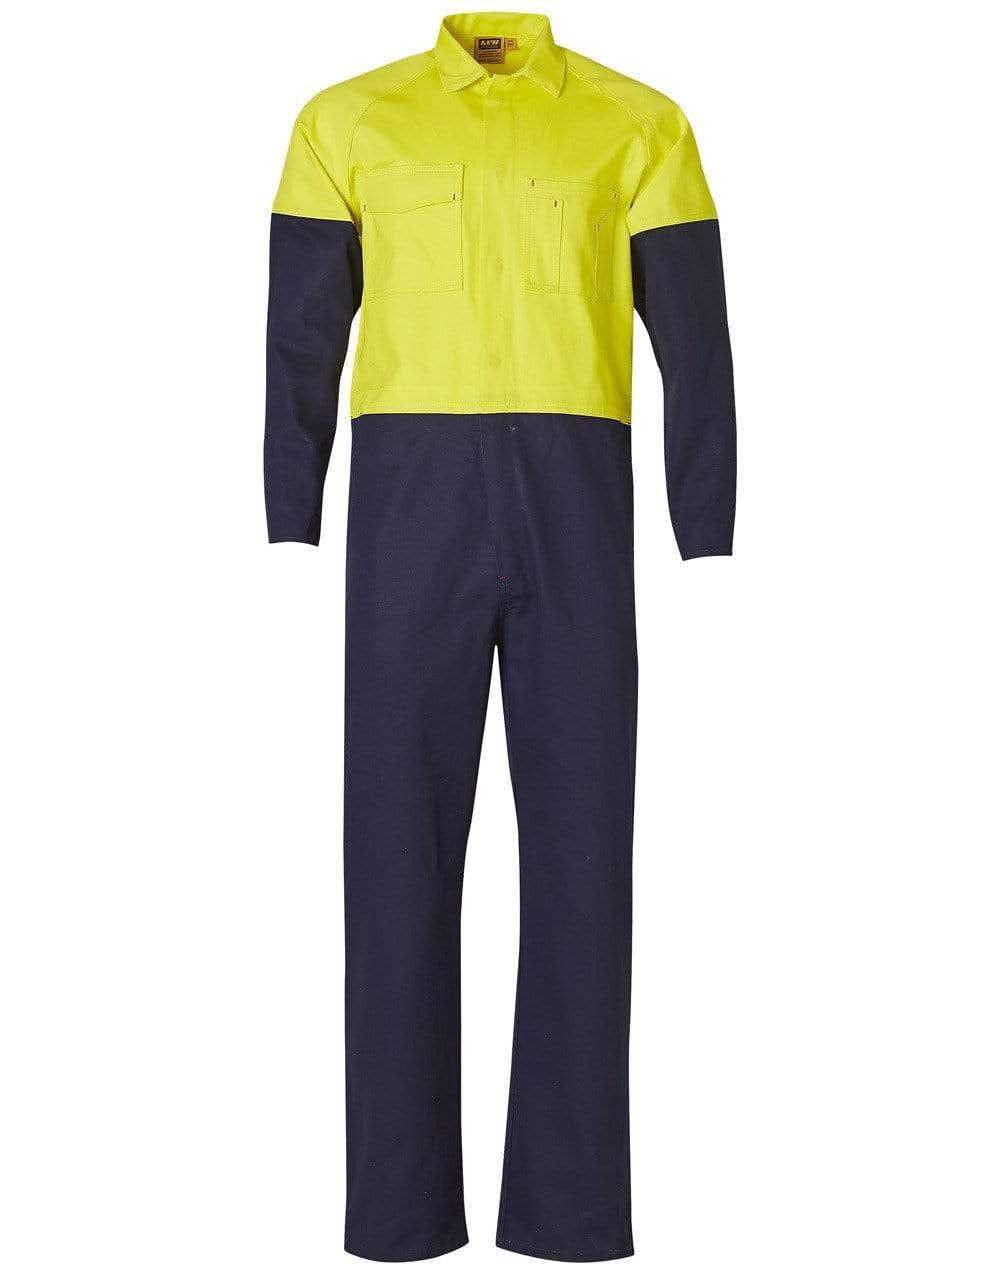 Australian Industrial Wear Work Wear Yellow/Navy / 87S Men's TWO TONE COVERALL Stout Size SW205